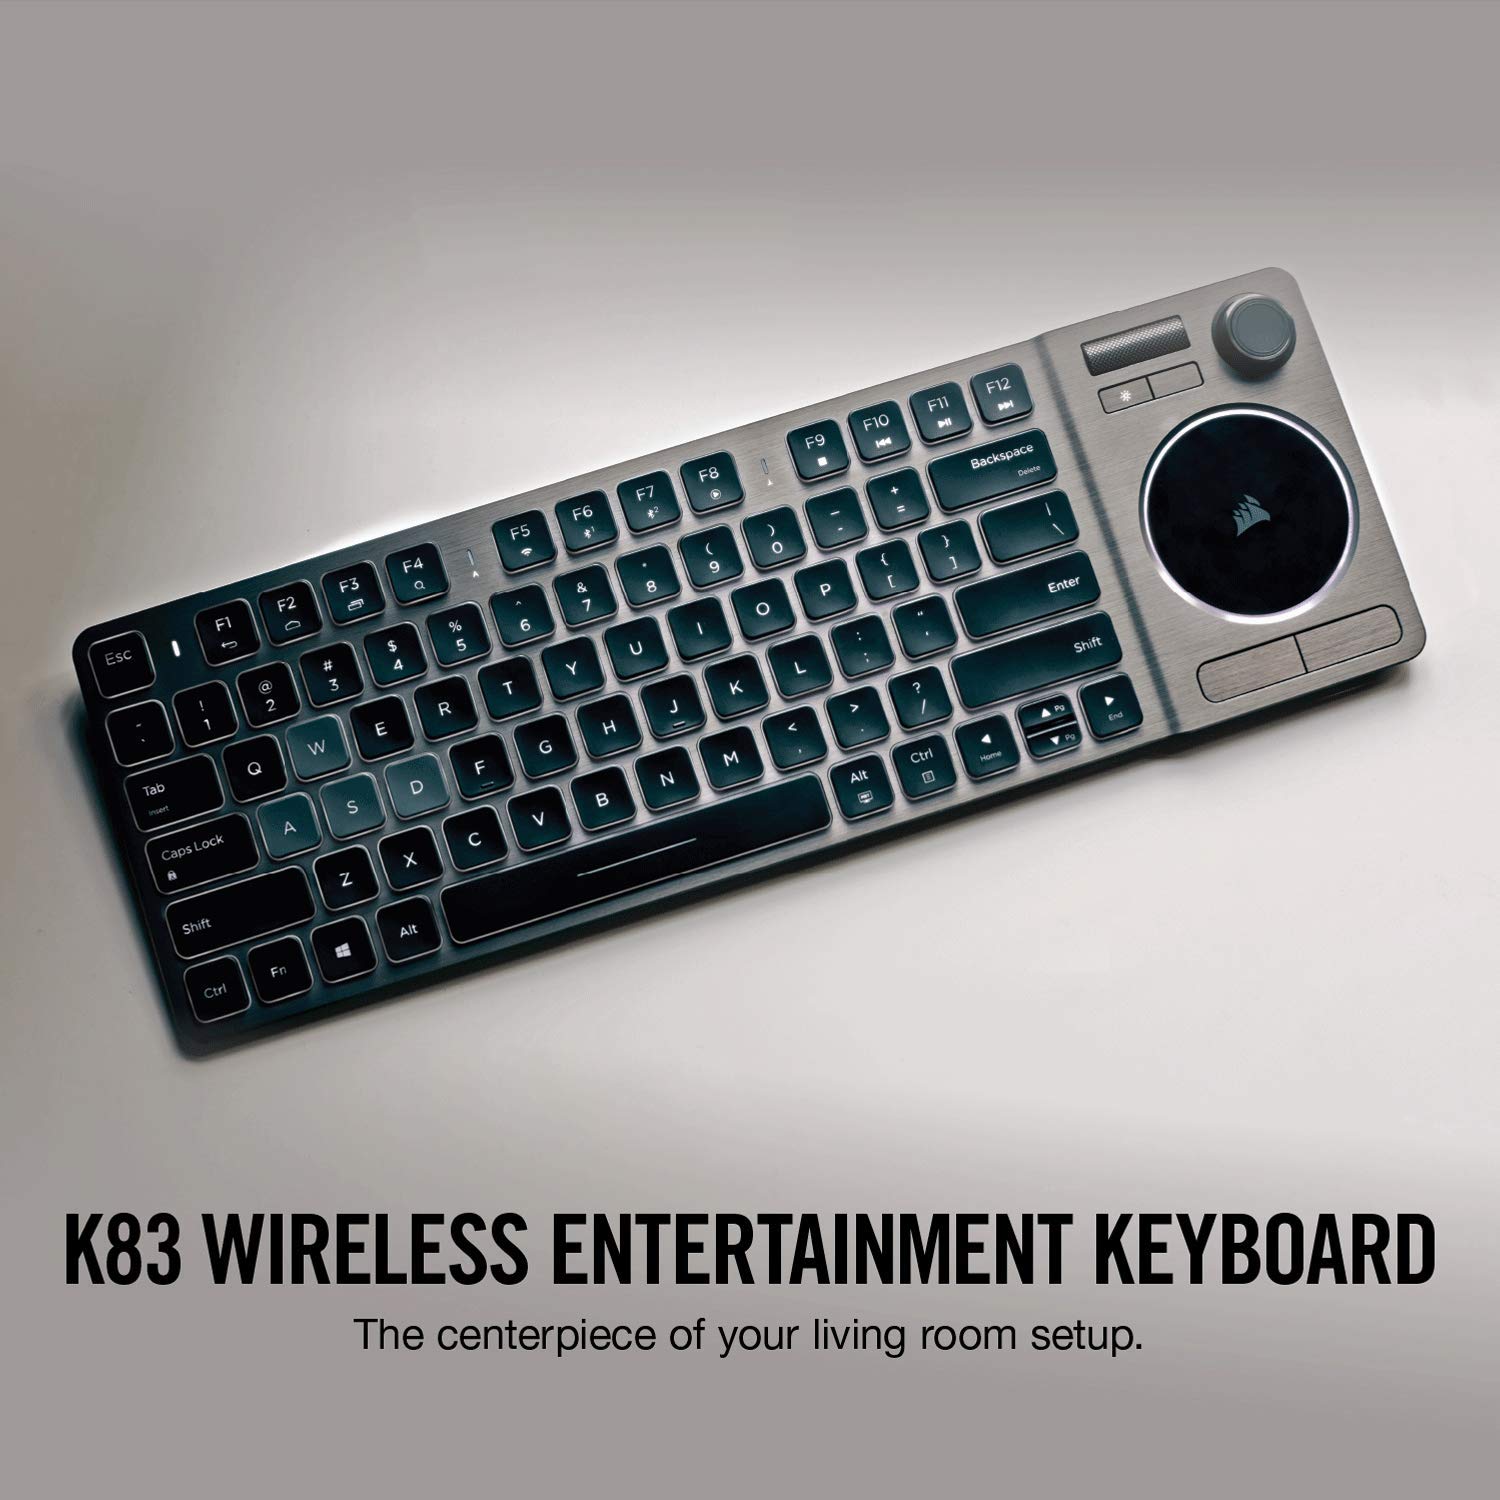 Corsair K83 Wireless Entertainment Keyboard แป้นภาษาไทย/อังกฤษ ของแท้ ประกันศูนย์ 2ปี คีย์บอร์ด